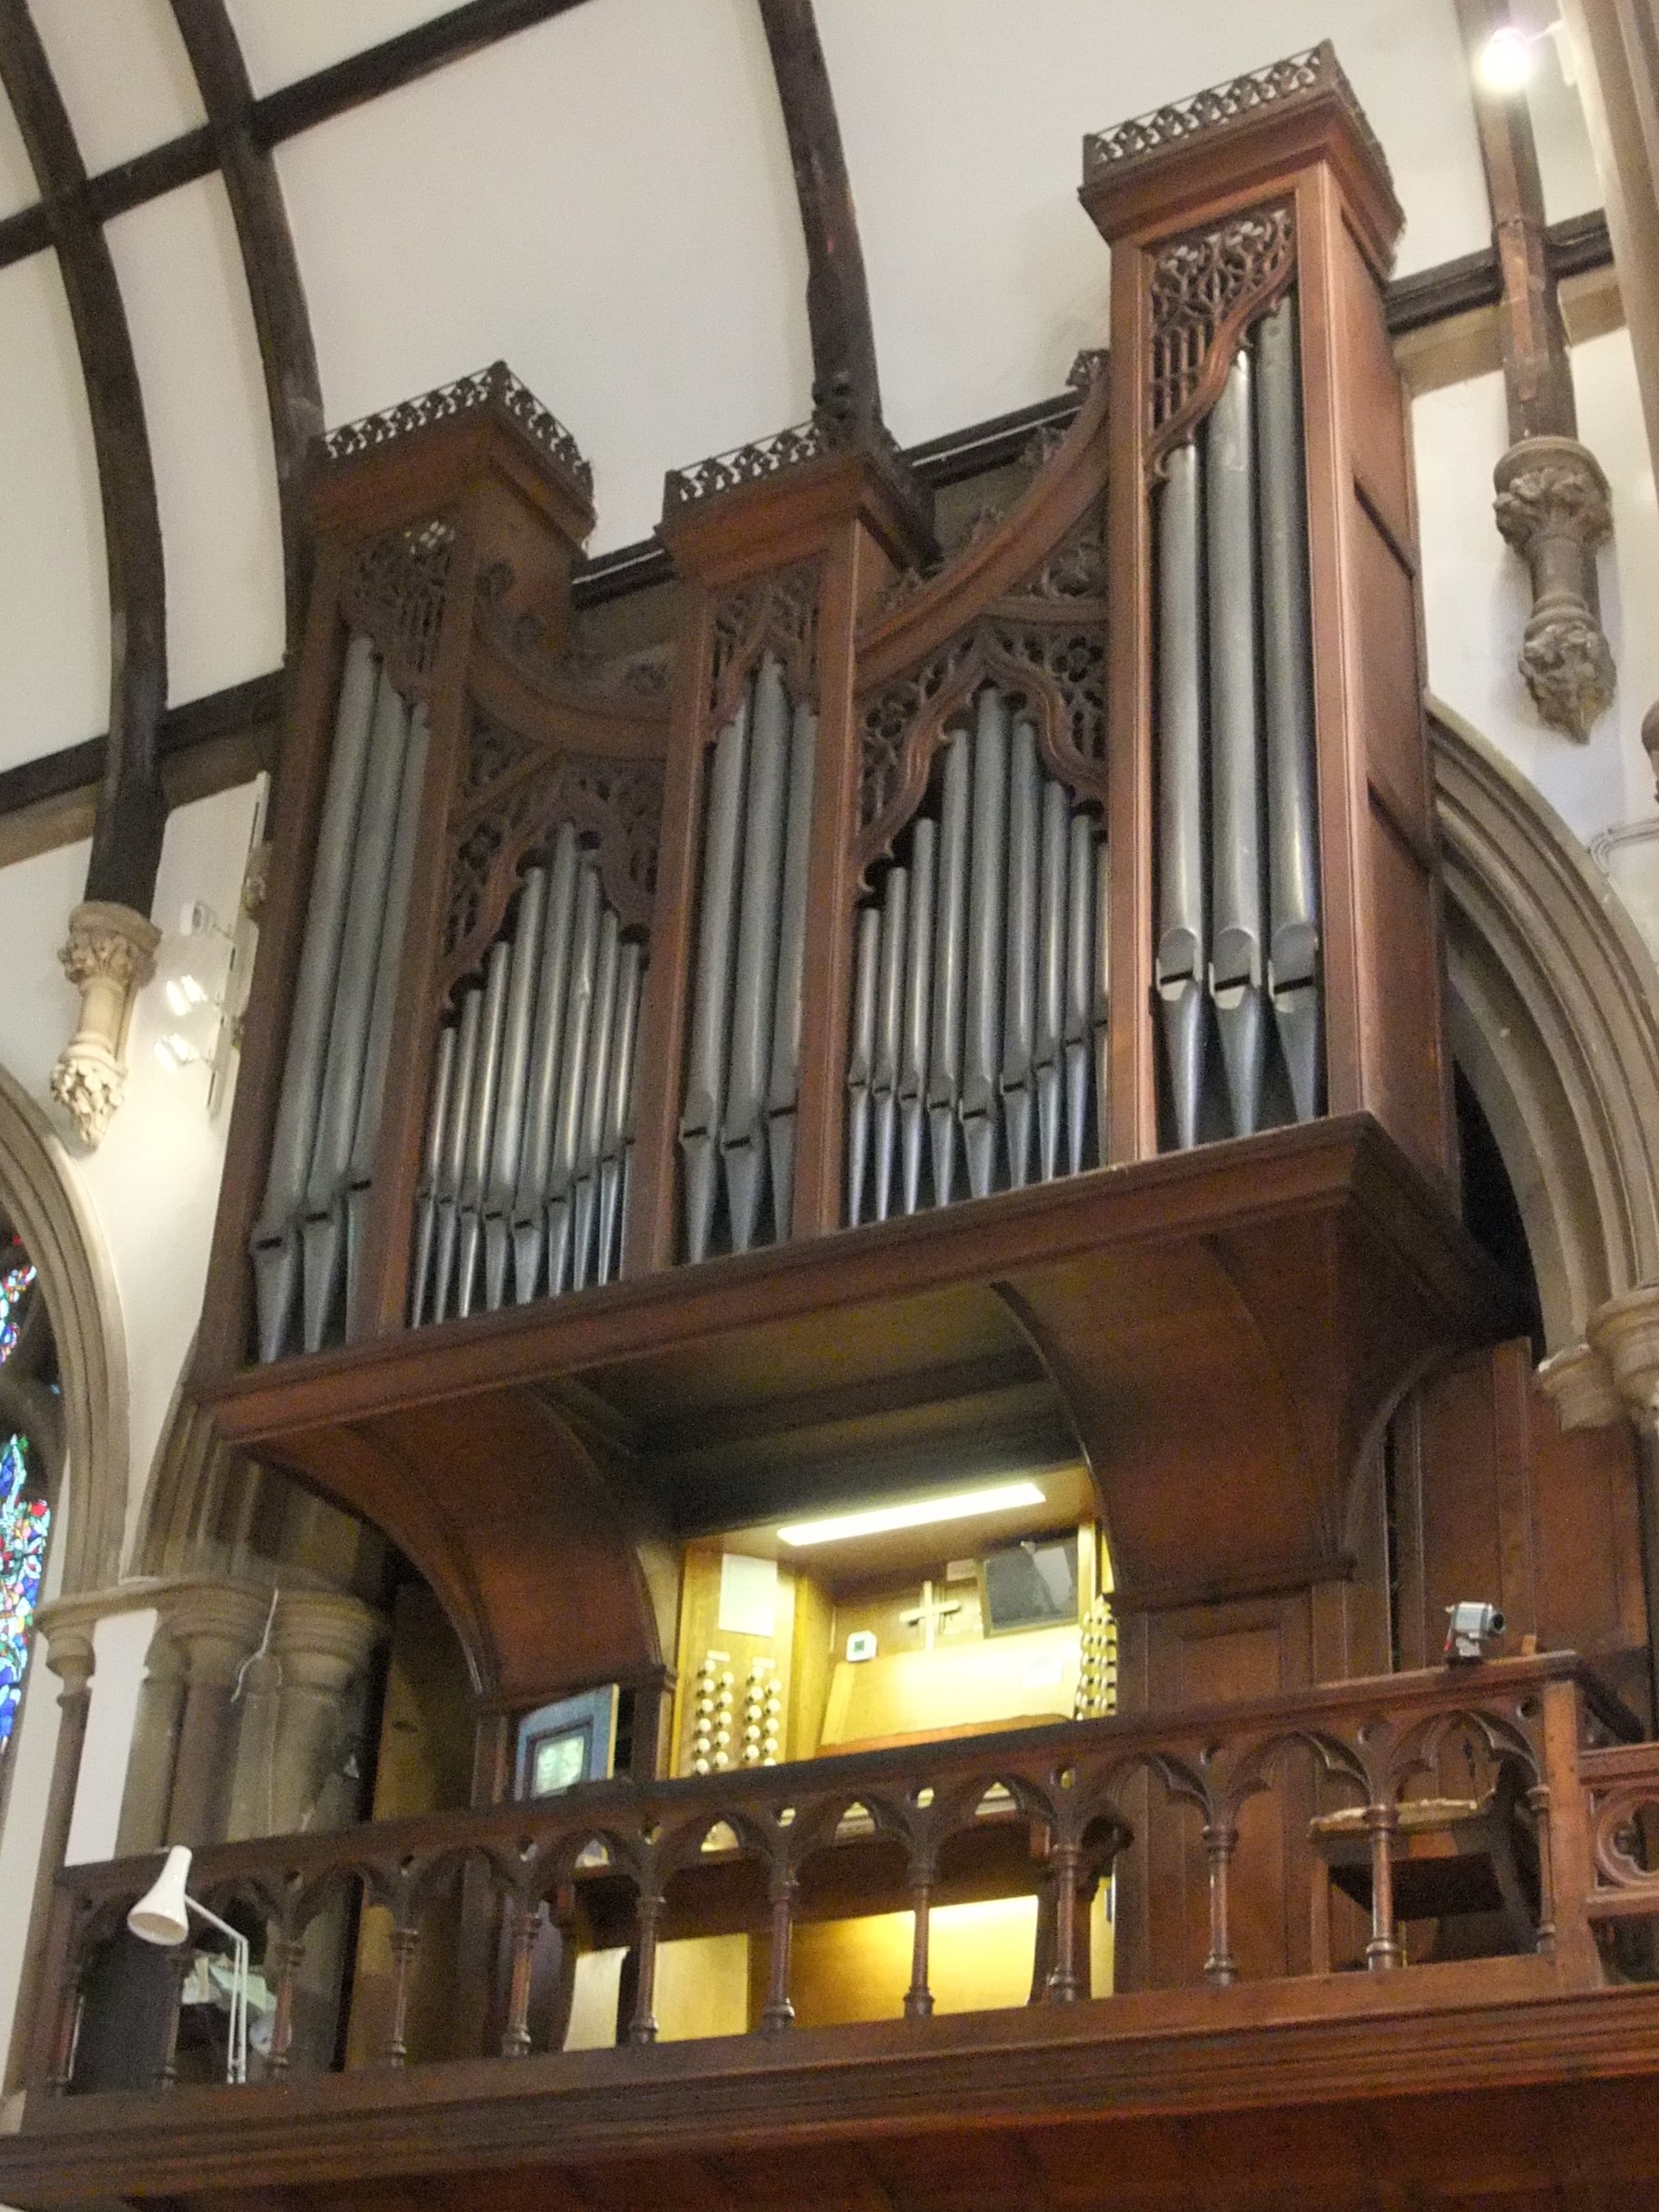 St James the Great, Dursley - Organ